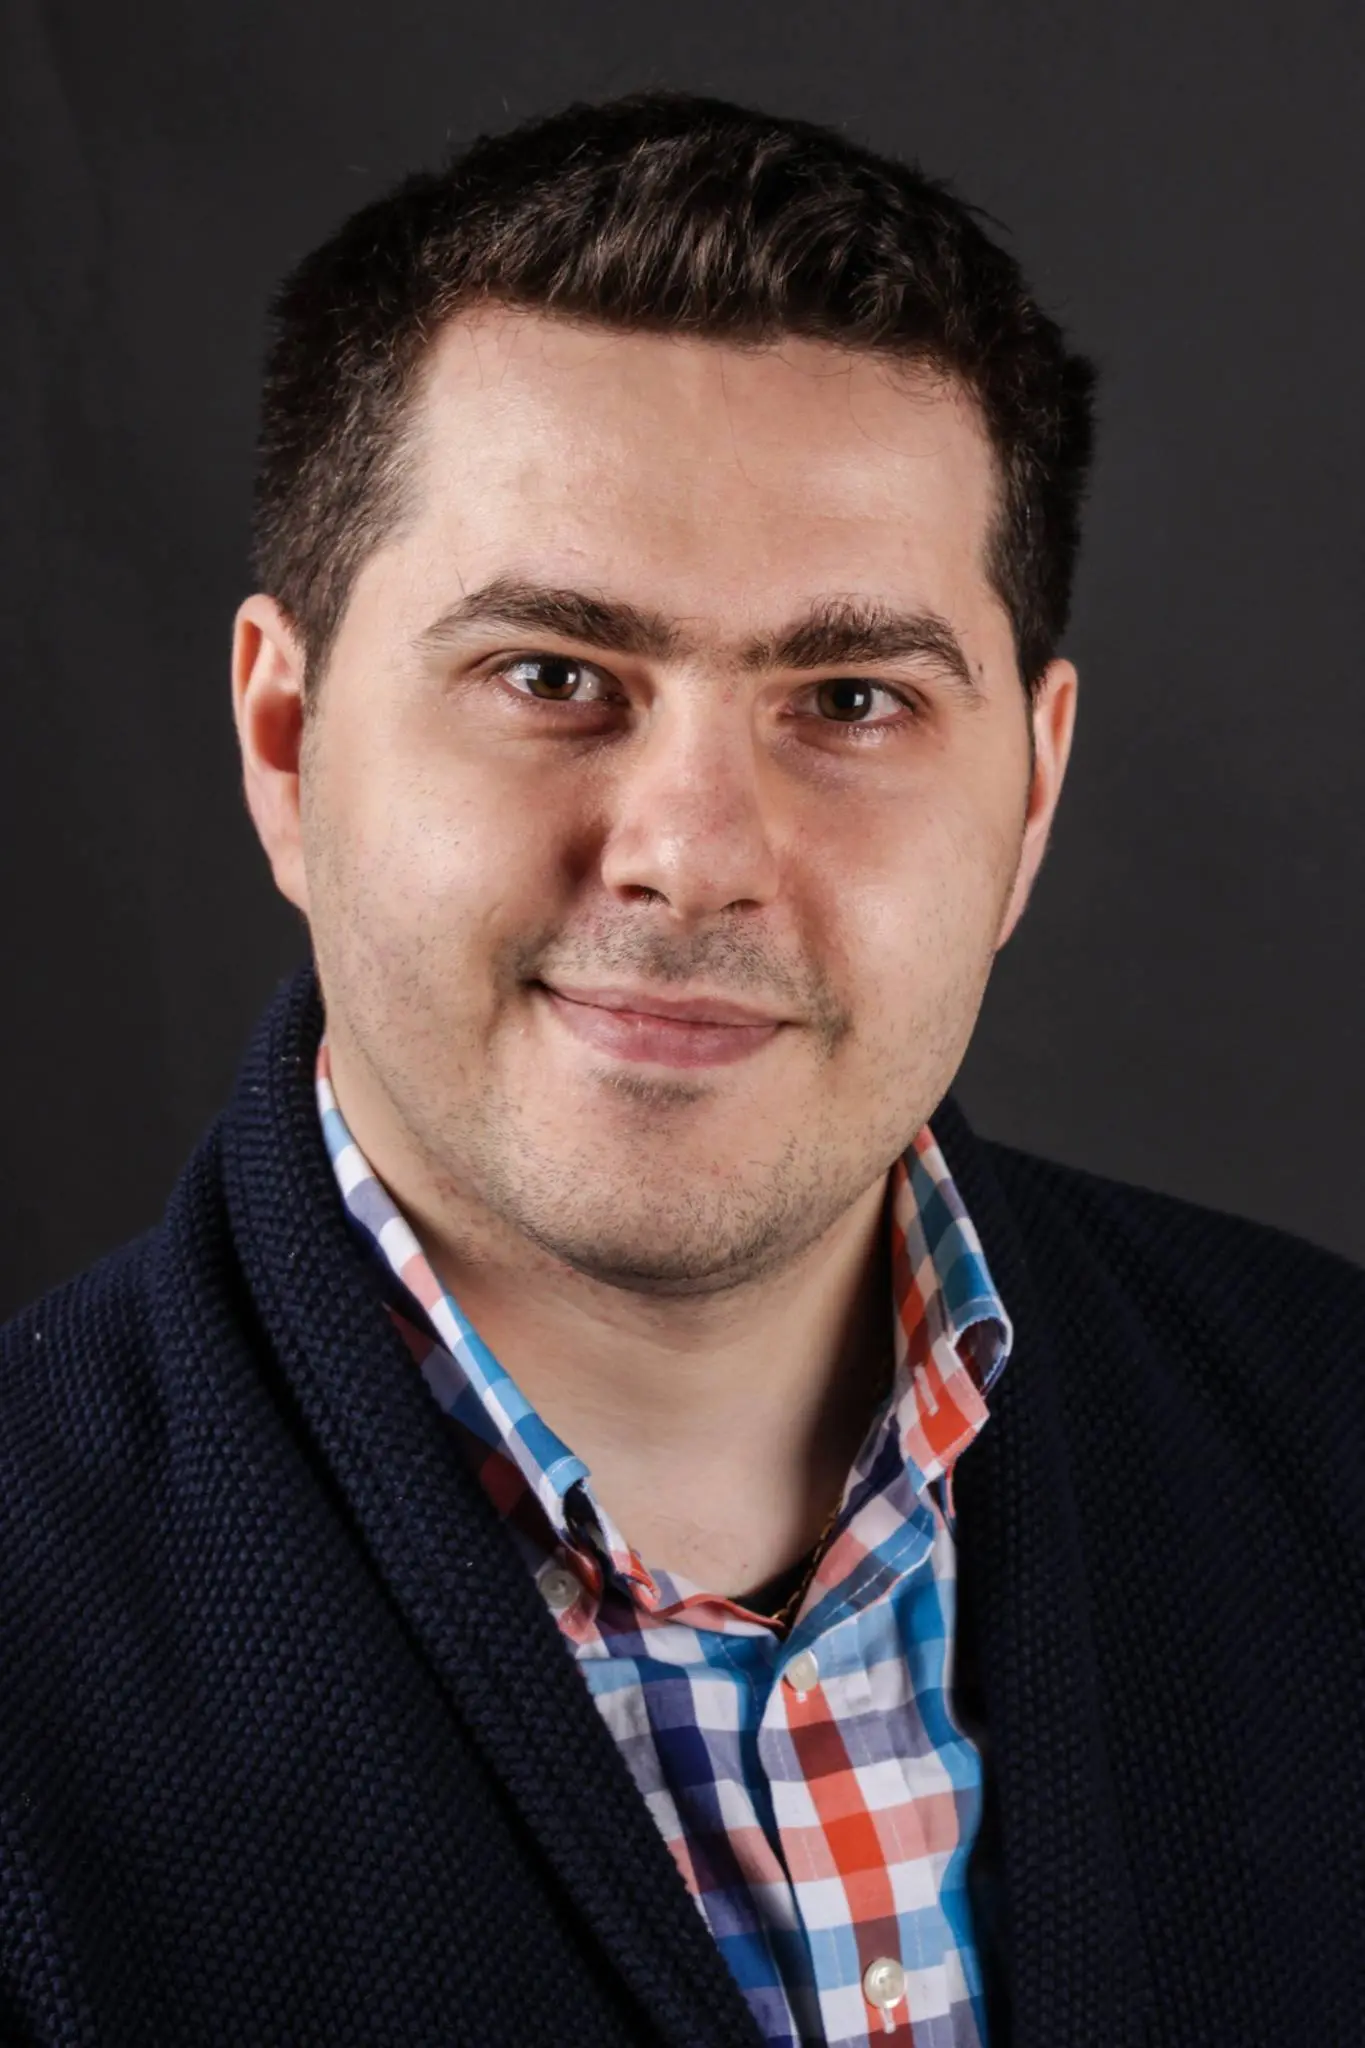 Georgi Mateev Profilbild groß